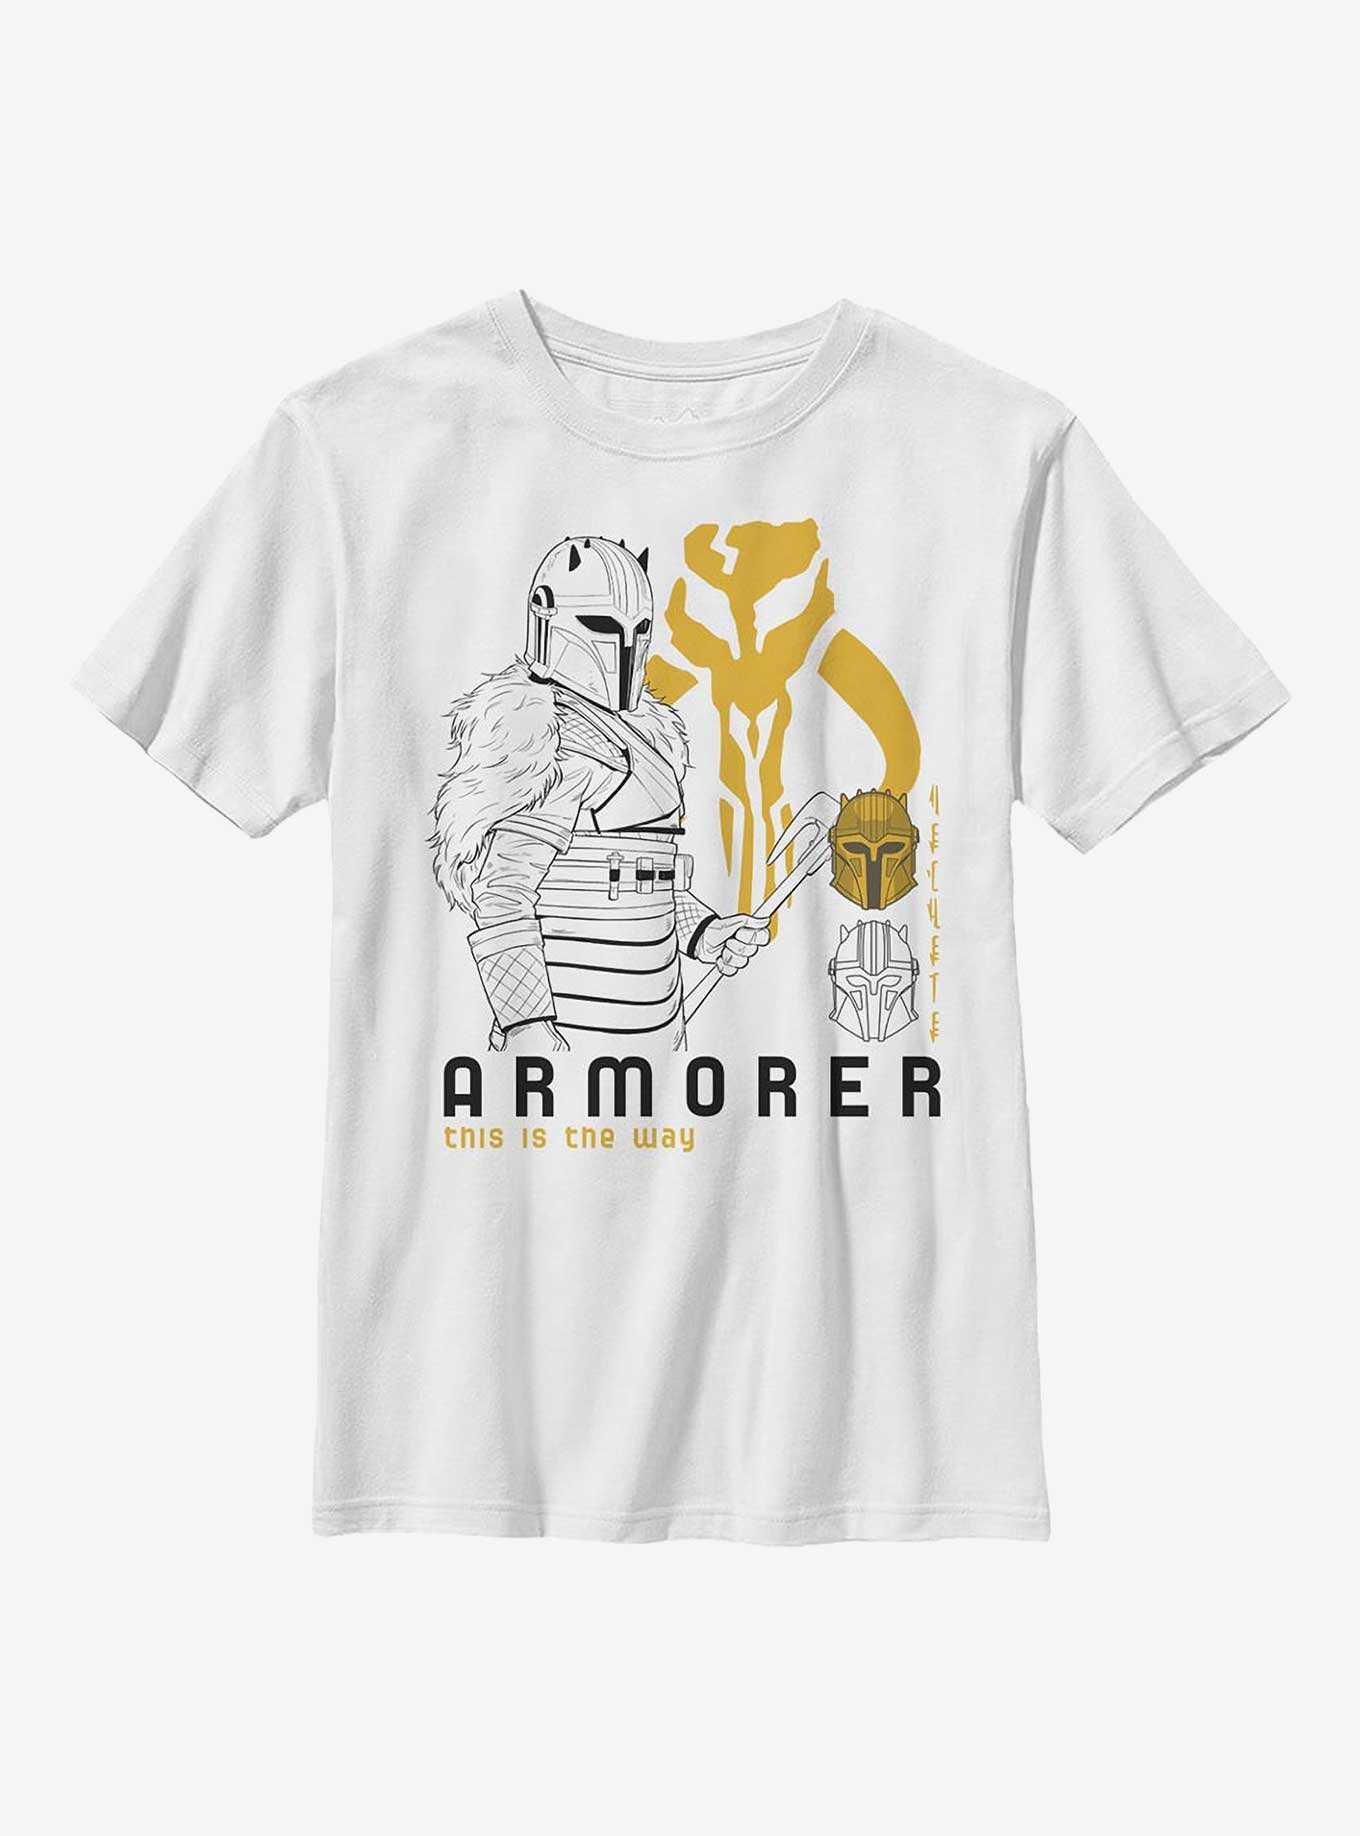 Star Wars The Mandalorian Armorer Youth T-Shirt, , hi-res